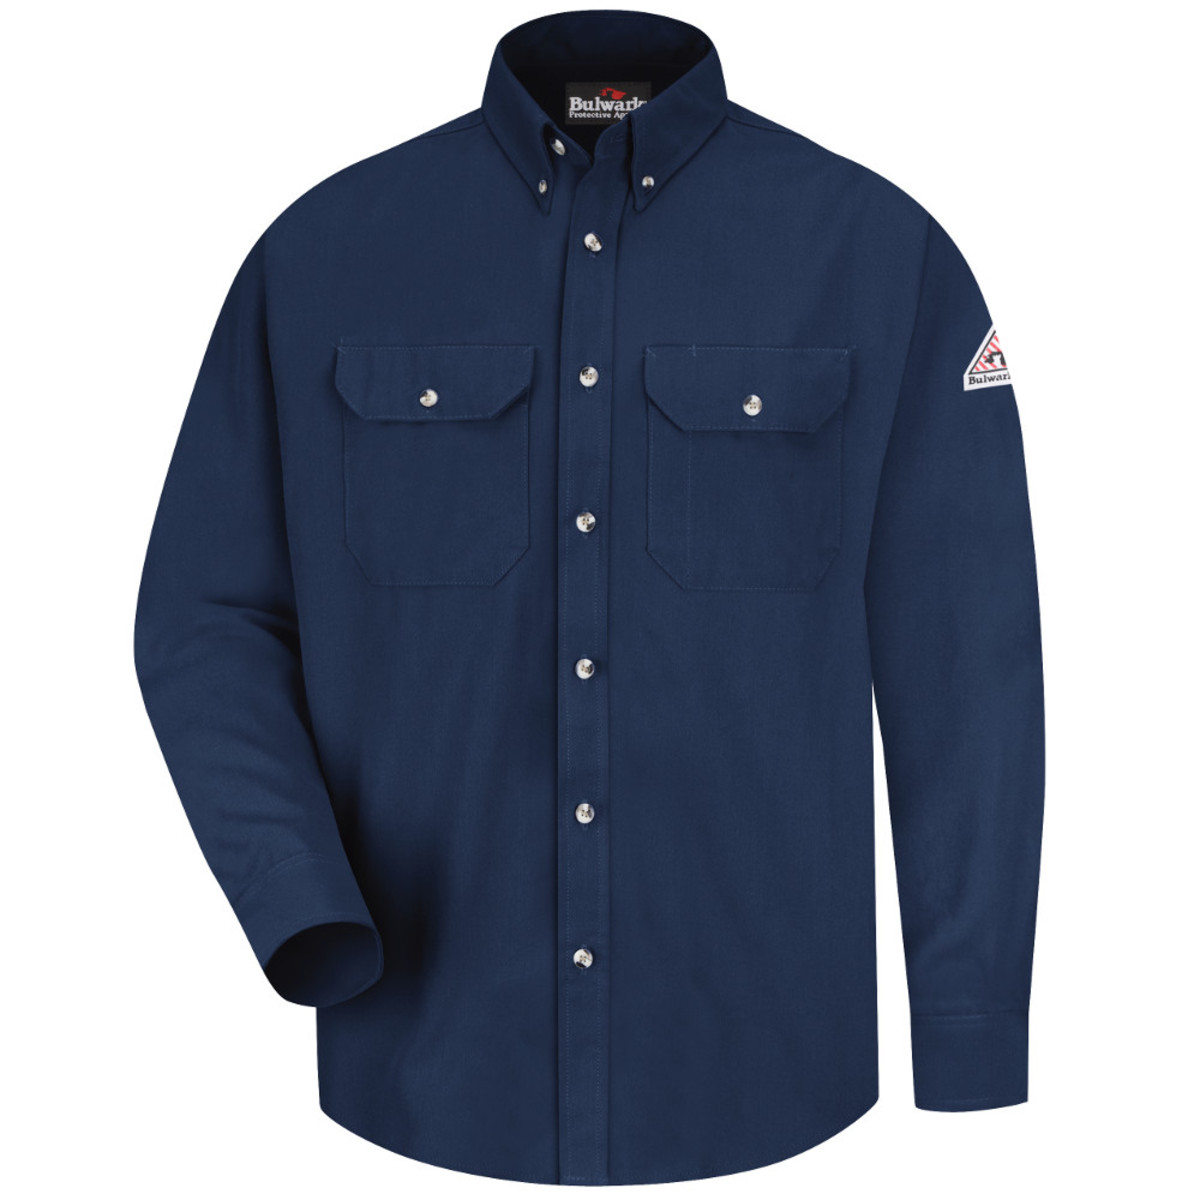 Bulwark® 2X X-Tall Navy Blue Modacrylic/Lyocell/Aramid Flame Resistant Dress Uniform Shirt With Button Front Closure